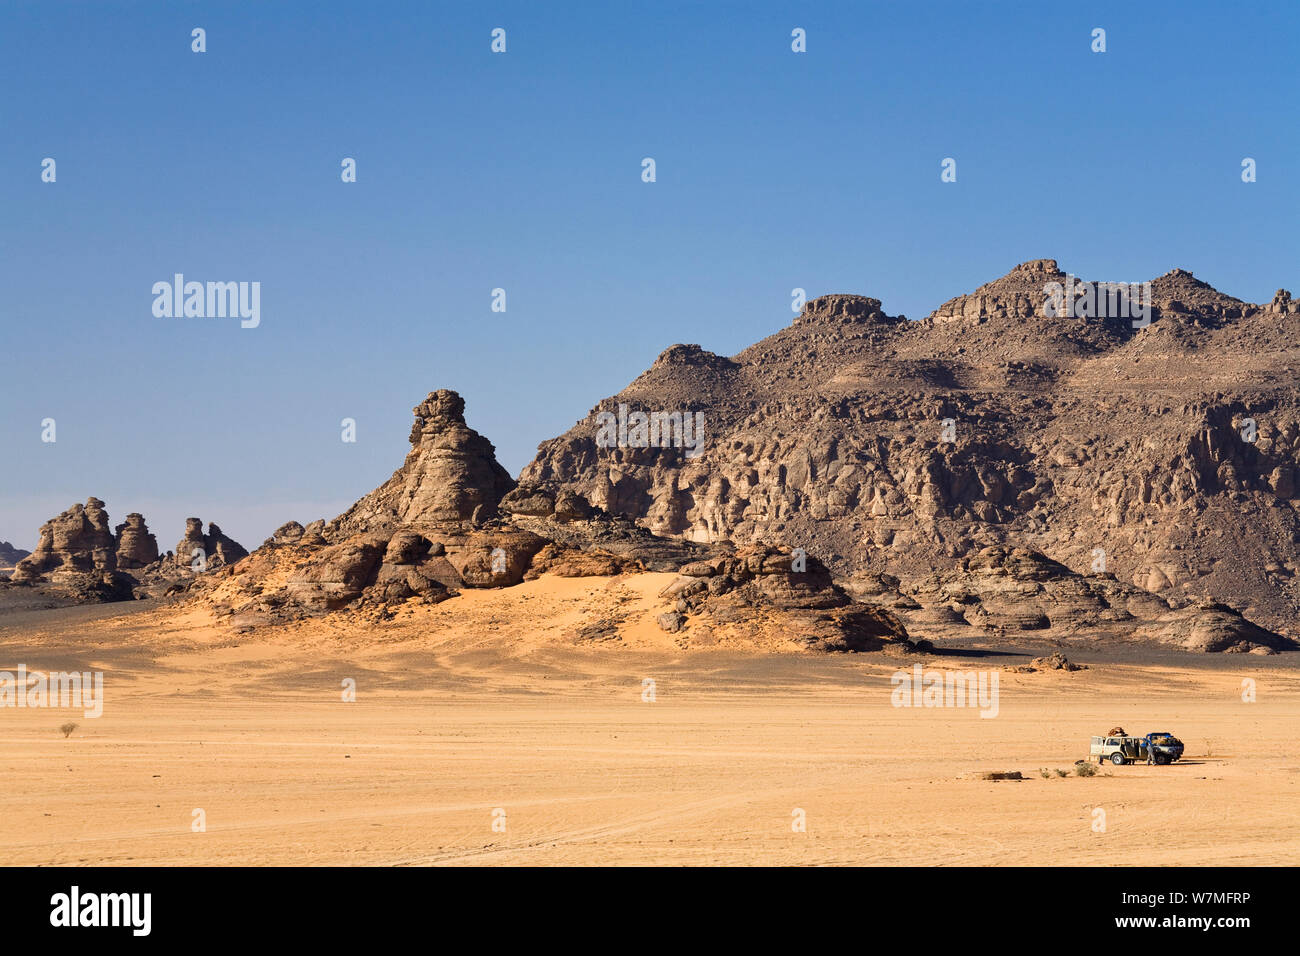 Akakus Mountains, Libya, Sahara, North Africa, November 2007 Stock Photo